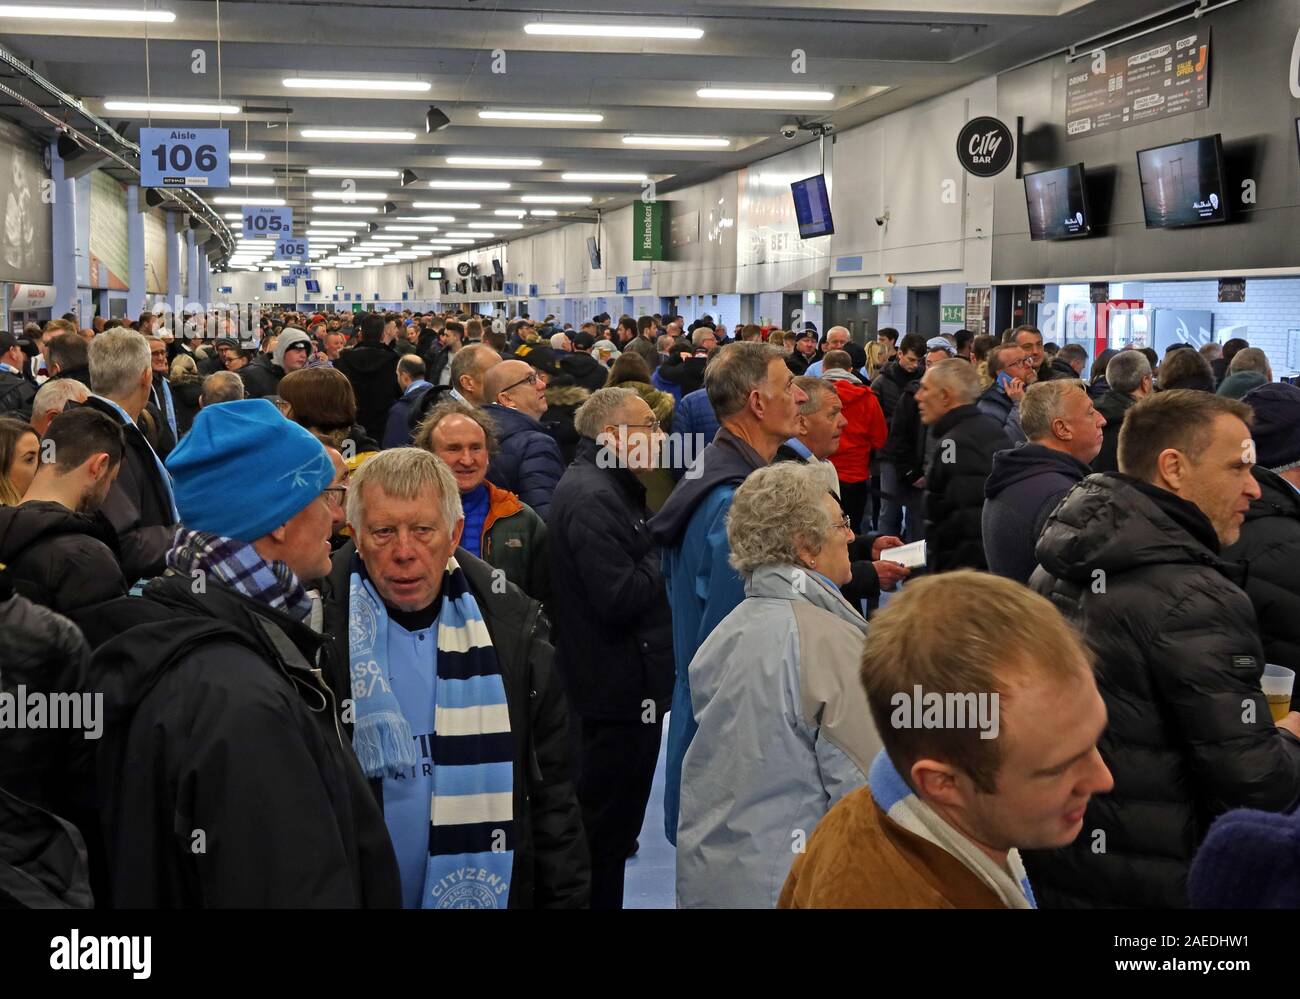 MCFC supporters,Etihad stadium,Manchester City Football Club,match Stock Photo